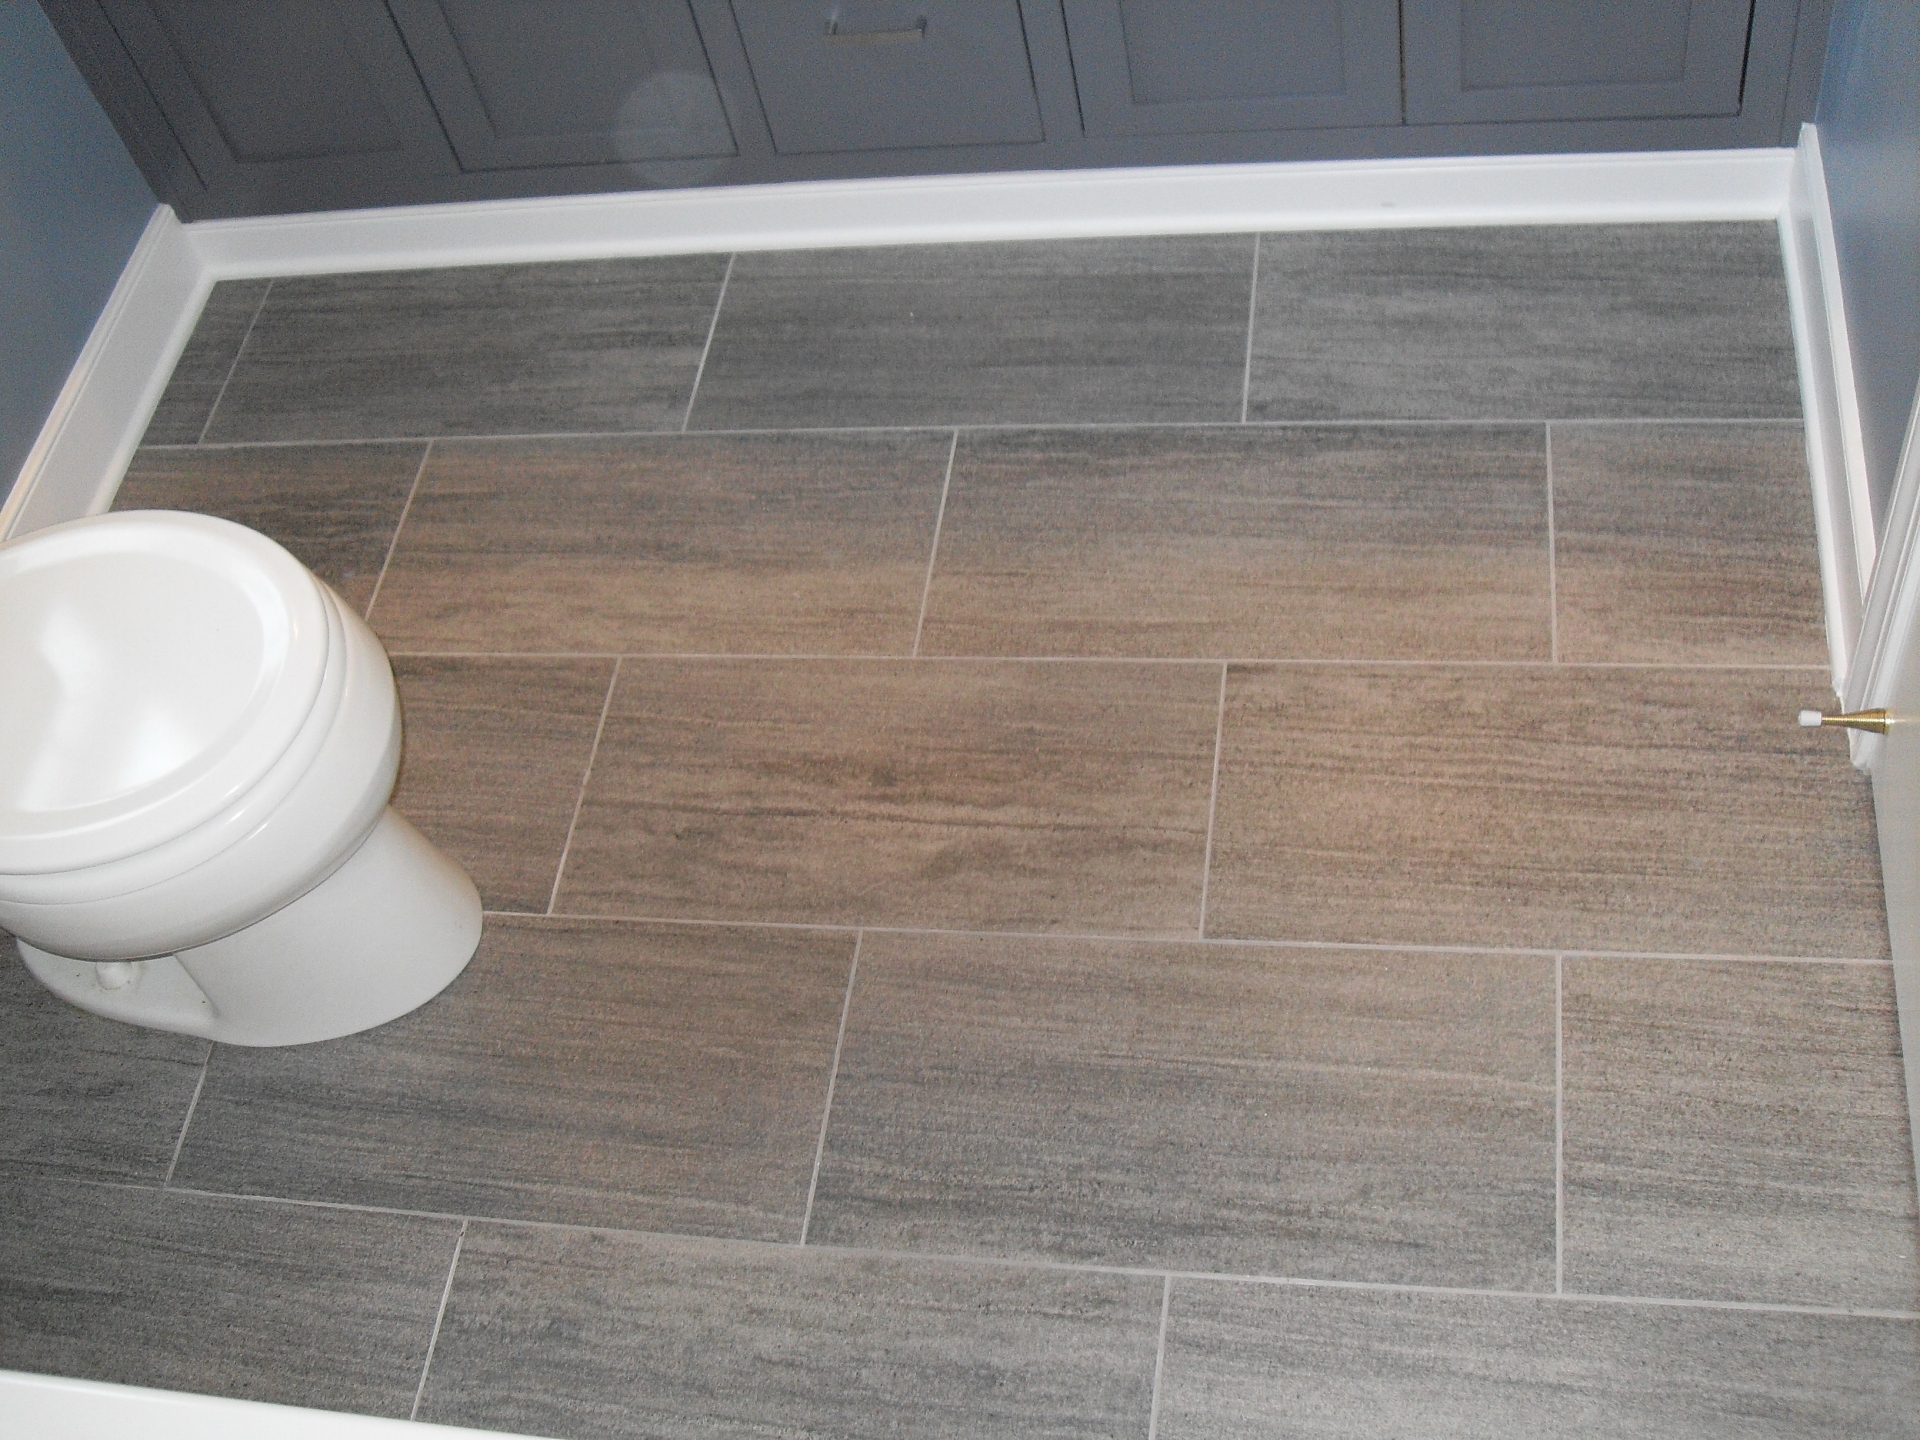 1920x1440-bathroom-tile-designs-grey-design-ideas-picture-inspiration